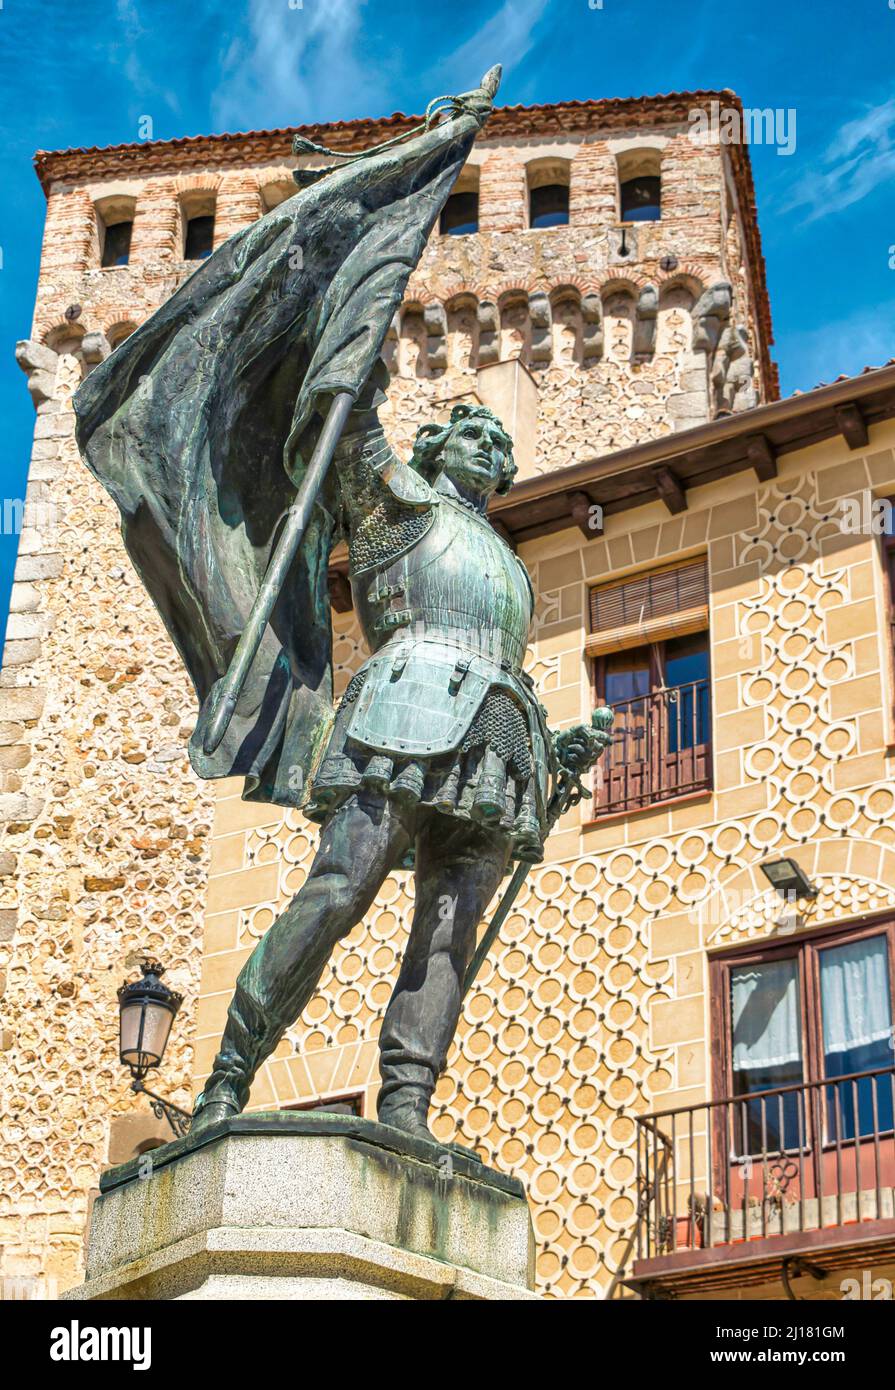 A statue tribute to the Castilian nobleman Juan Bravo in a central square, city of Segovia, Spain Stock Photo